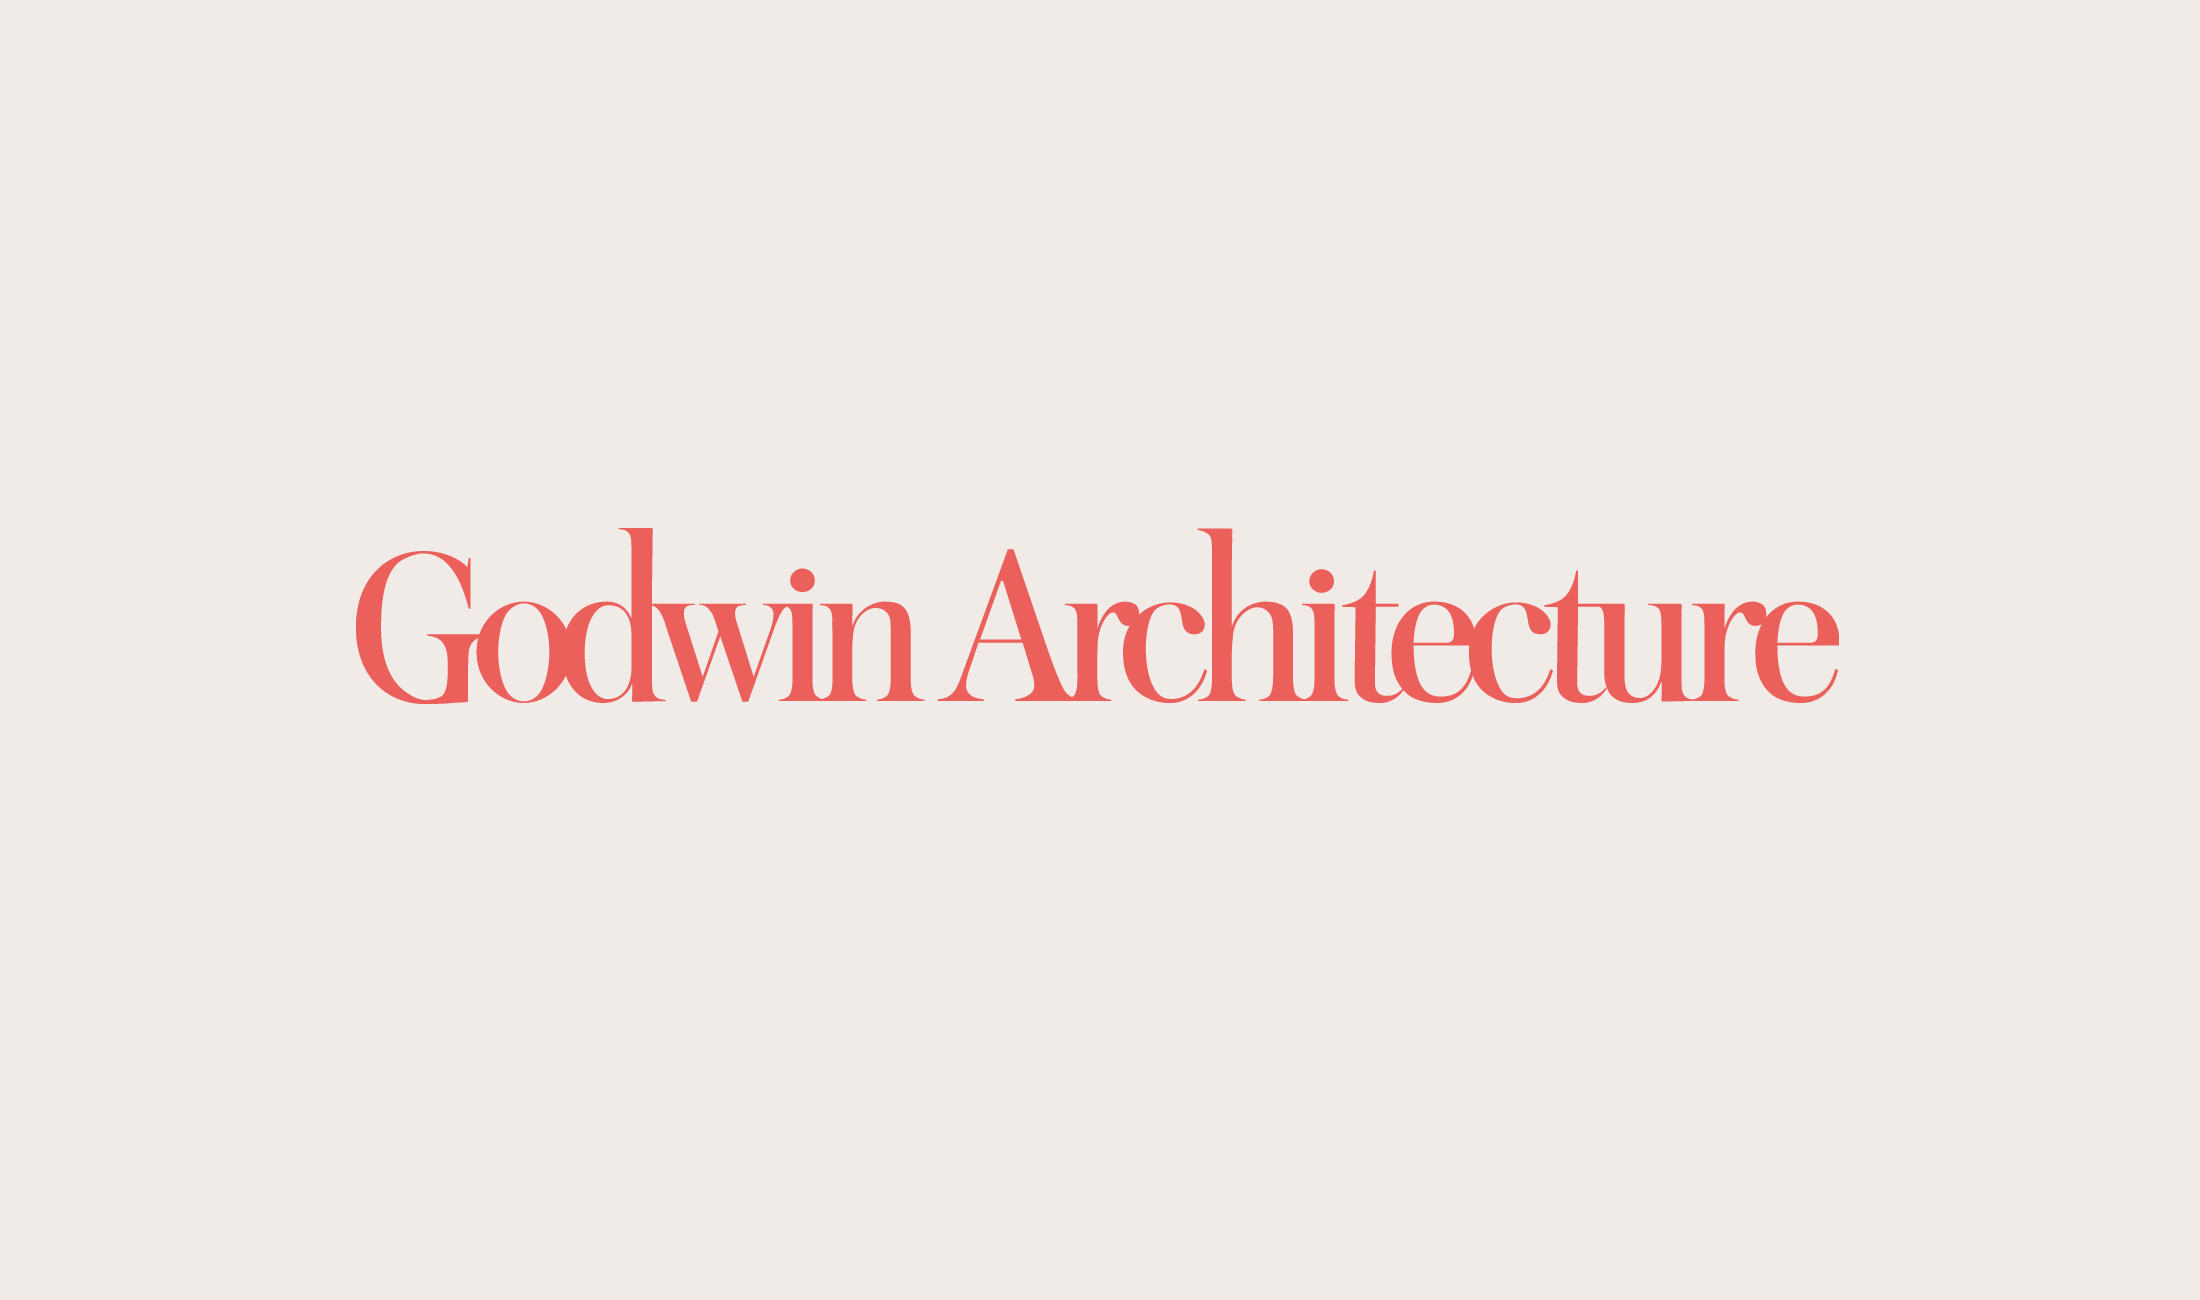 Godwin Architecture